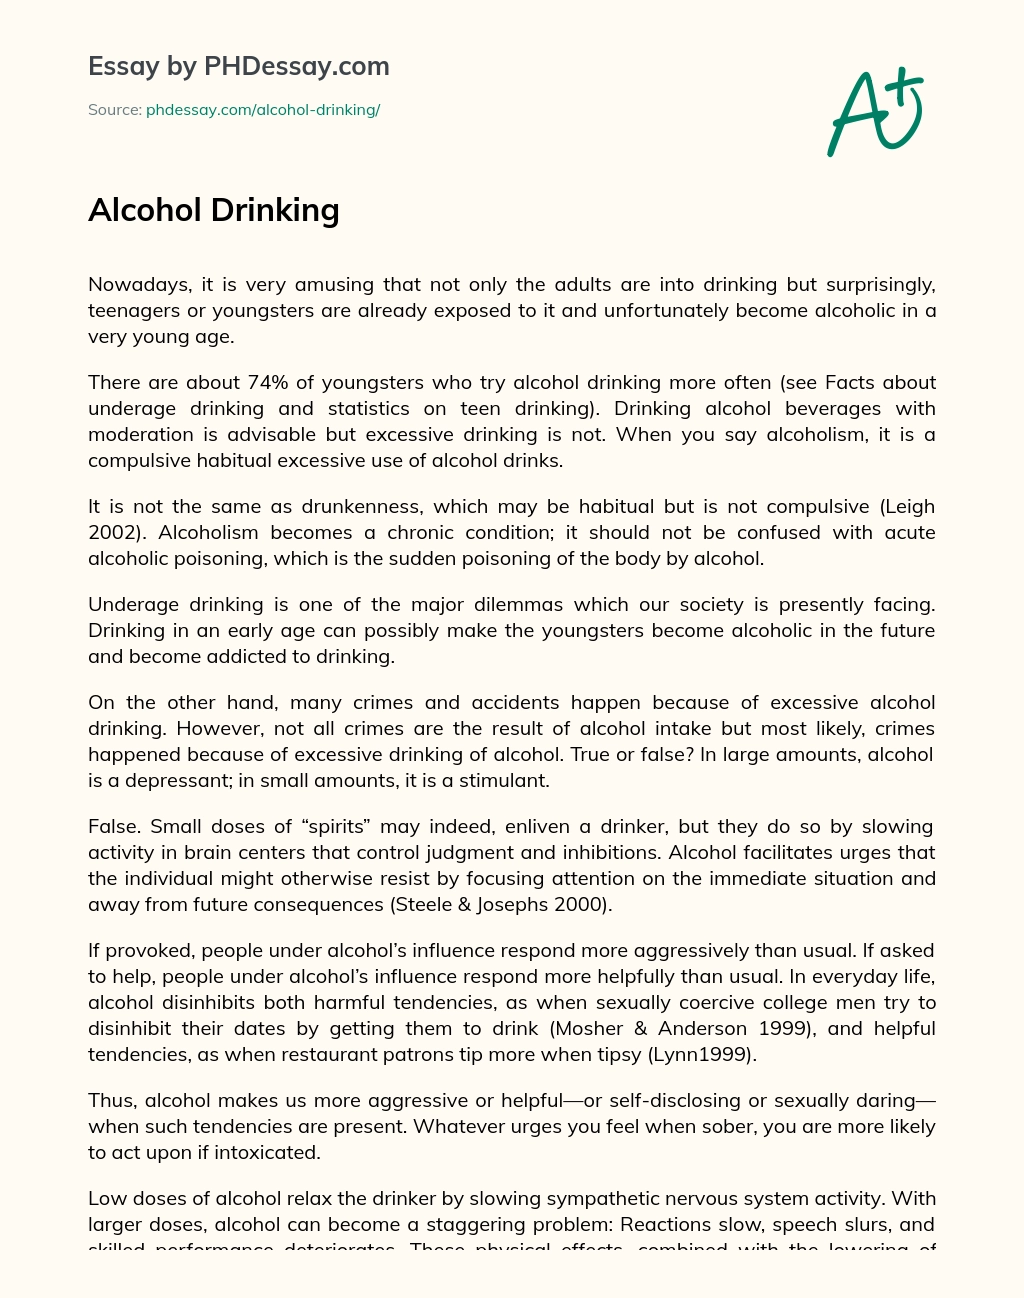 alcohol abuse argumentative essay